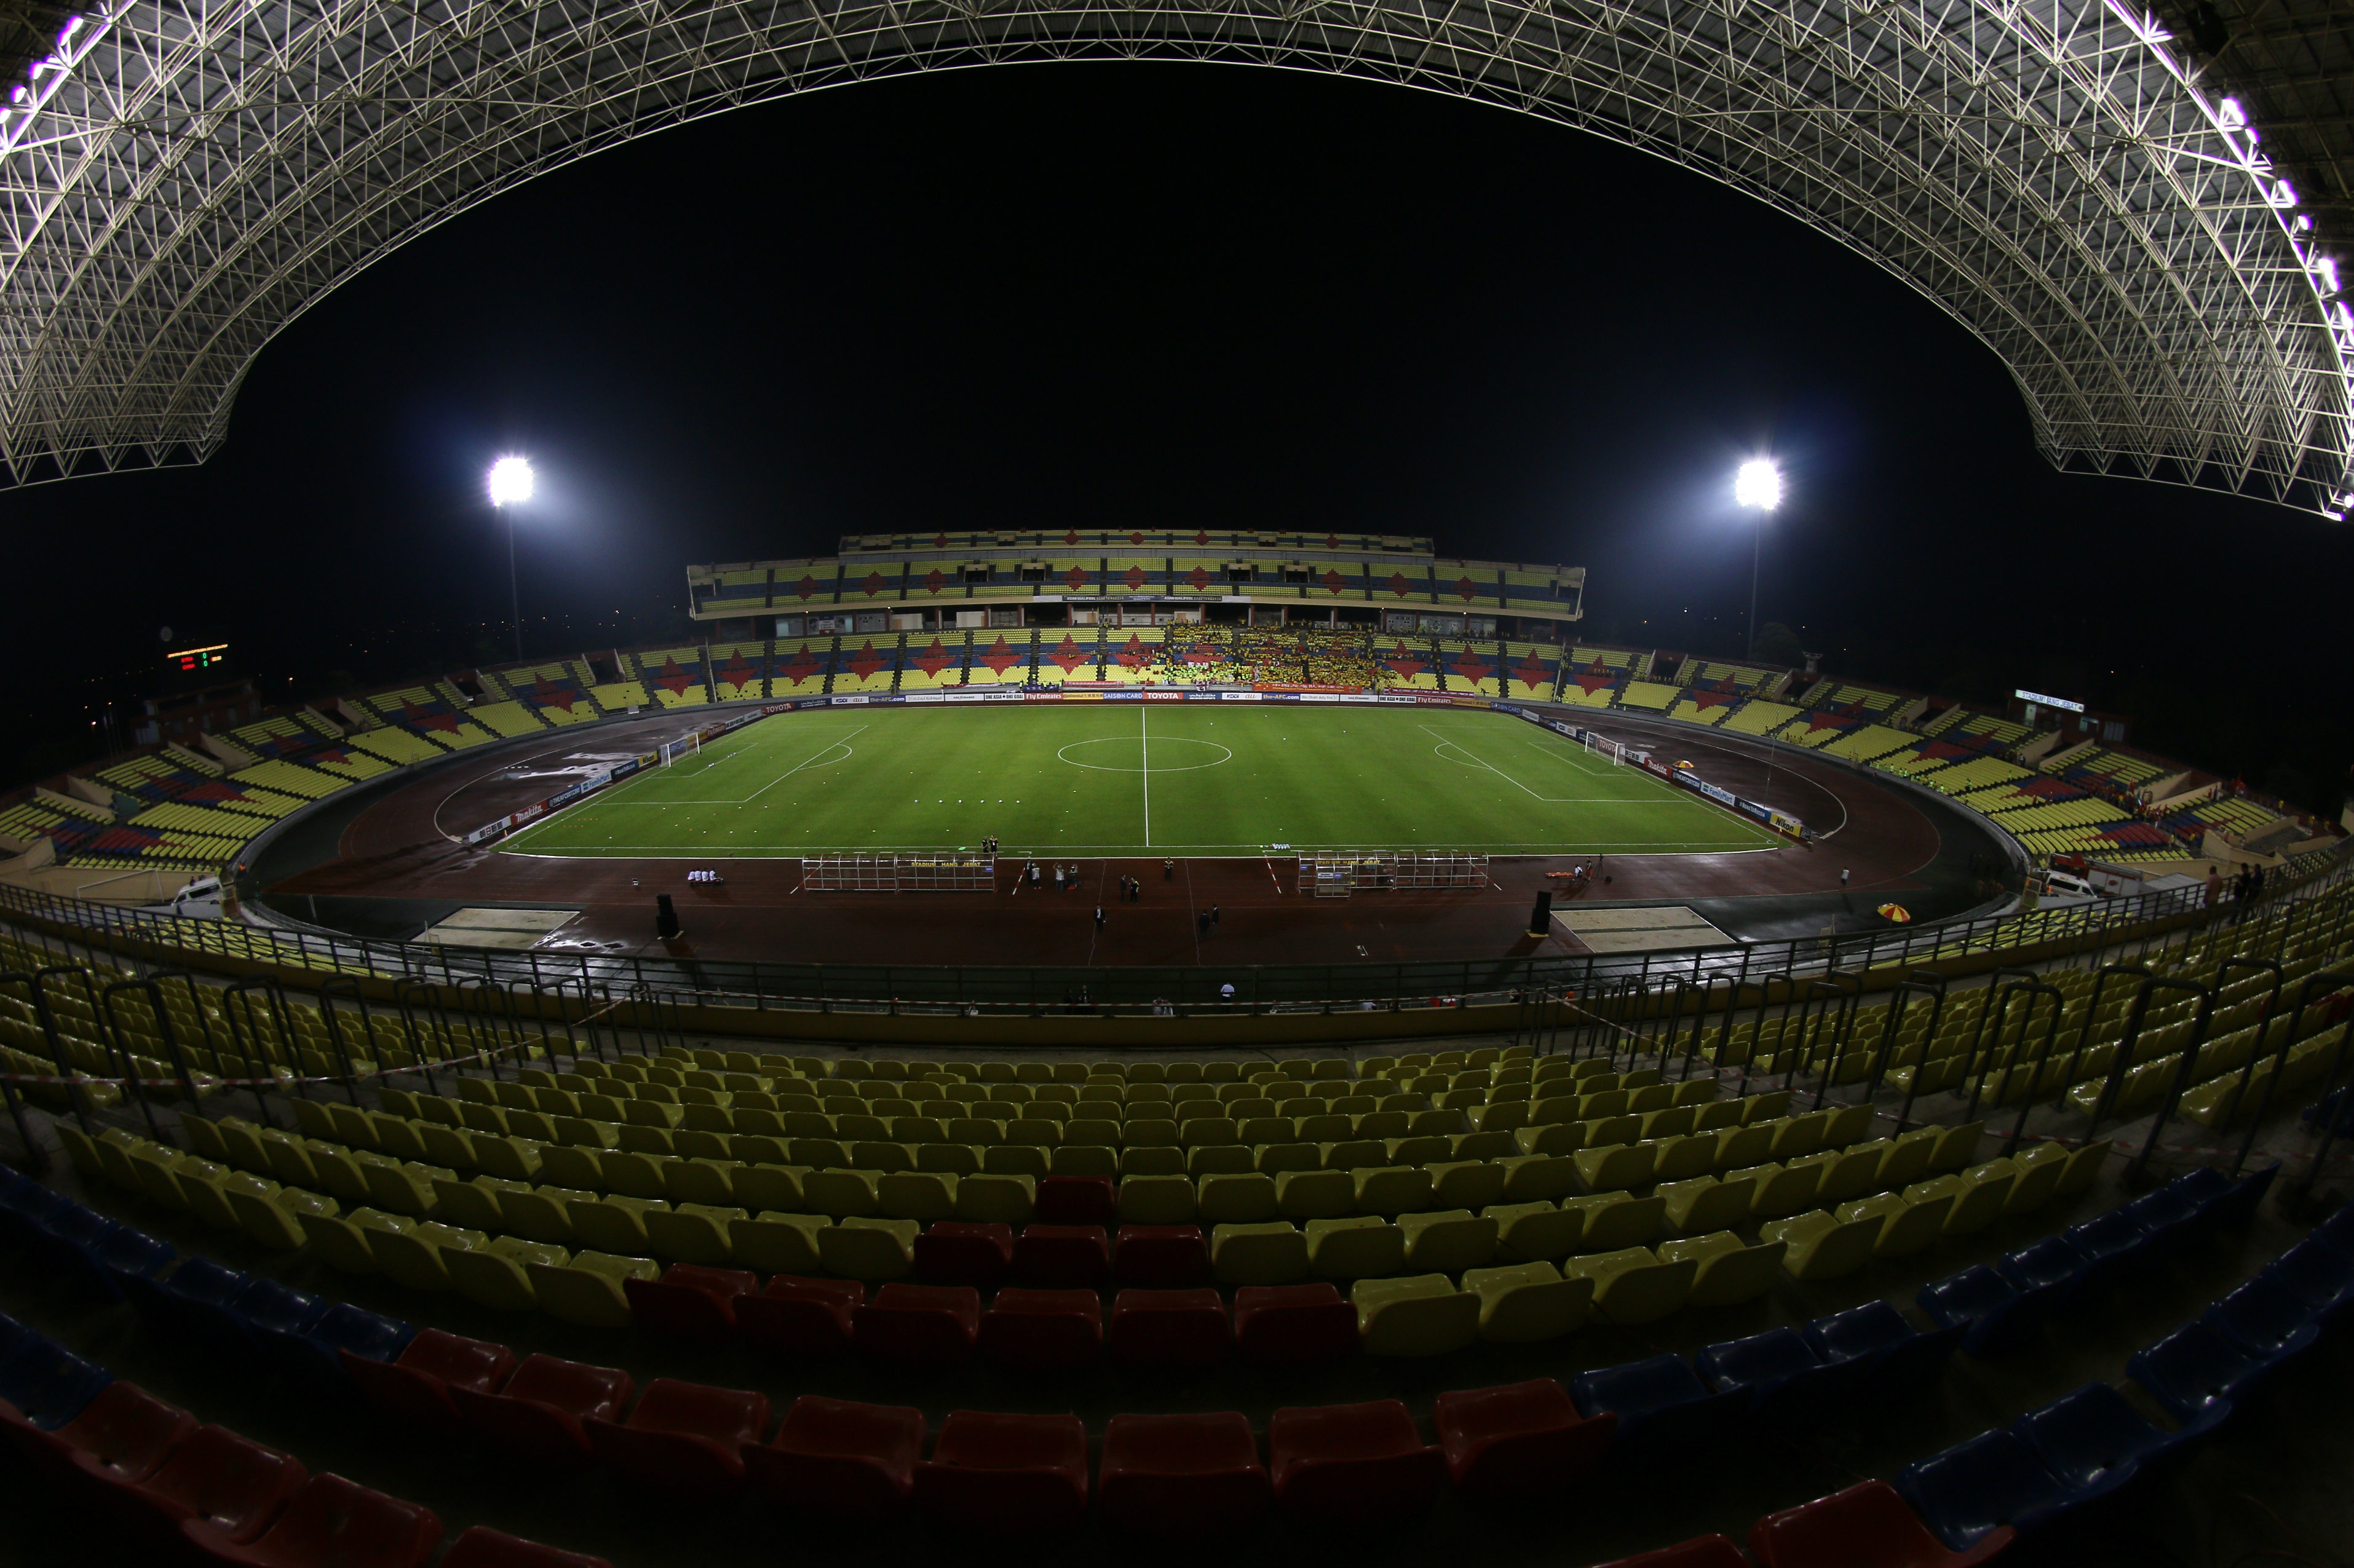 The Hang Jebat Stadium in Malaysia.